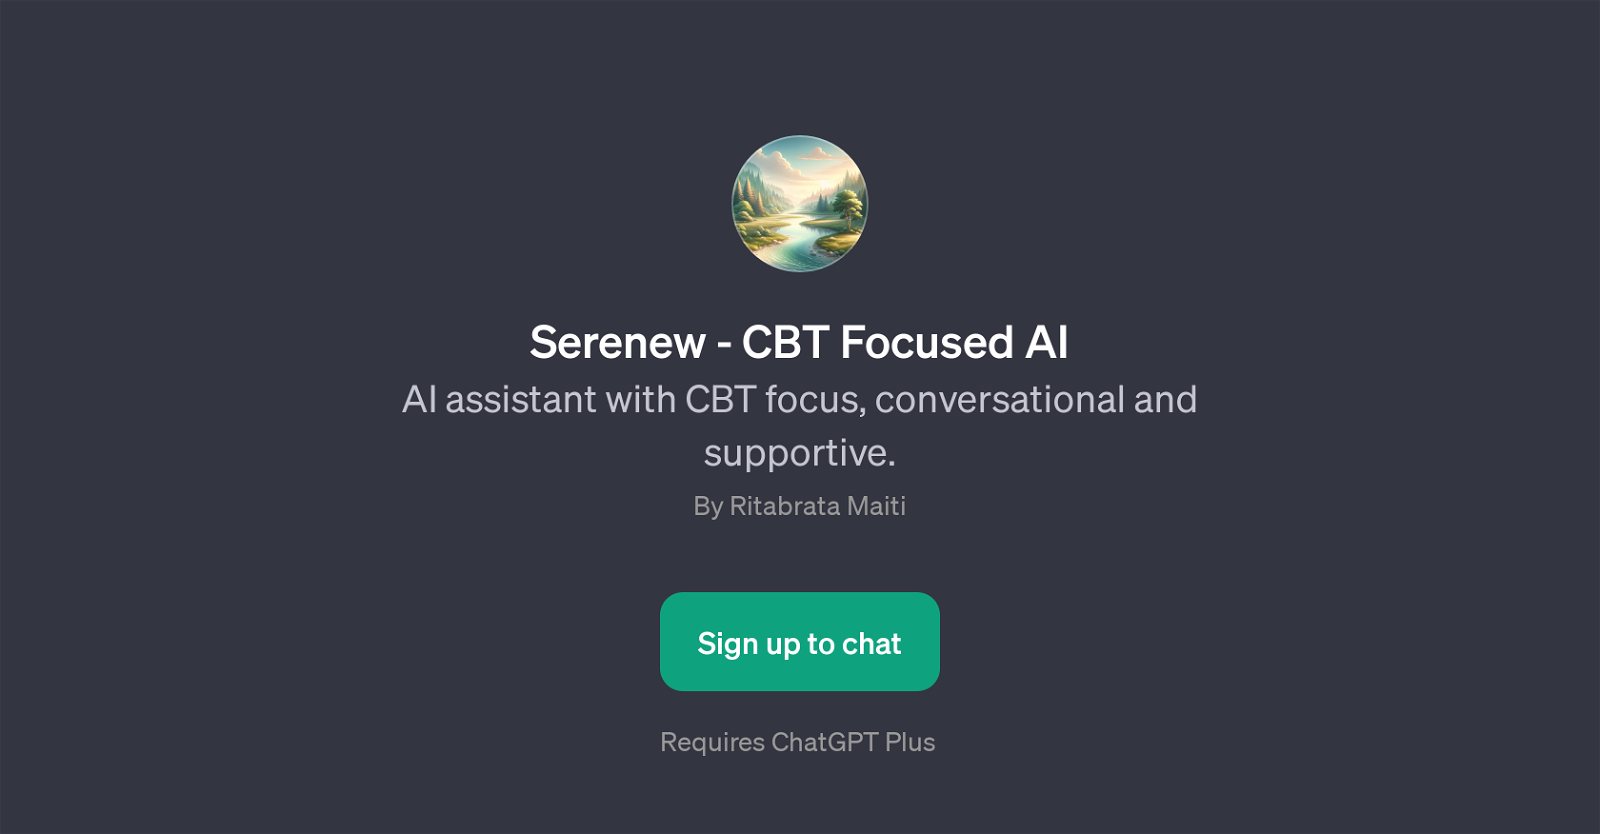 Serenew - CBT Focused AI website